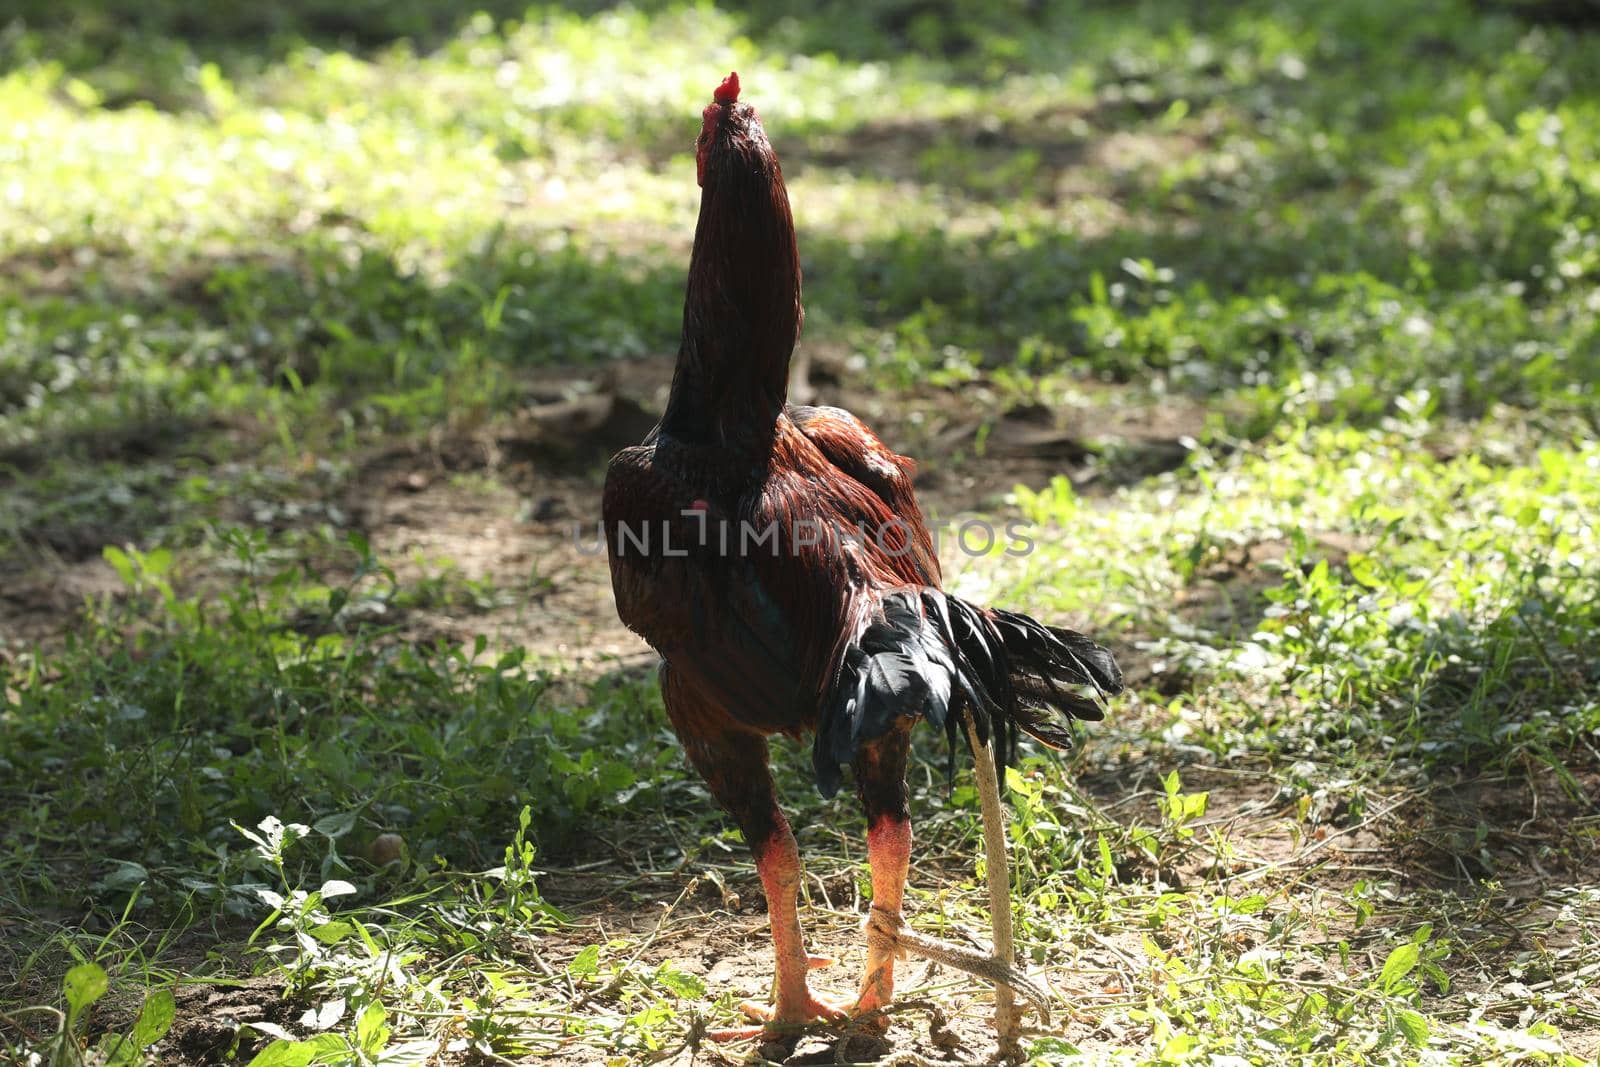 Indian Rooster by rajastills